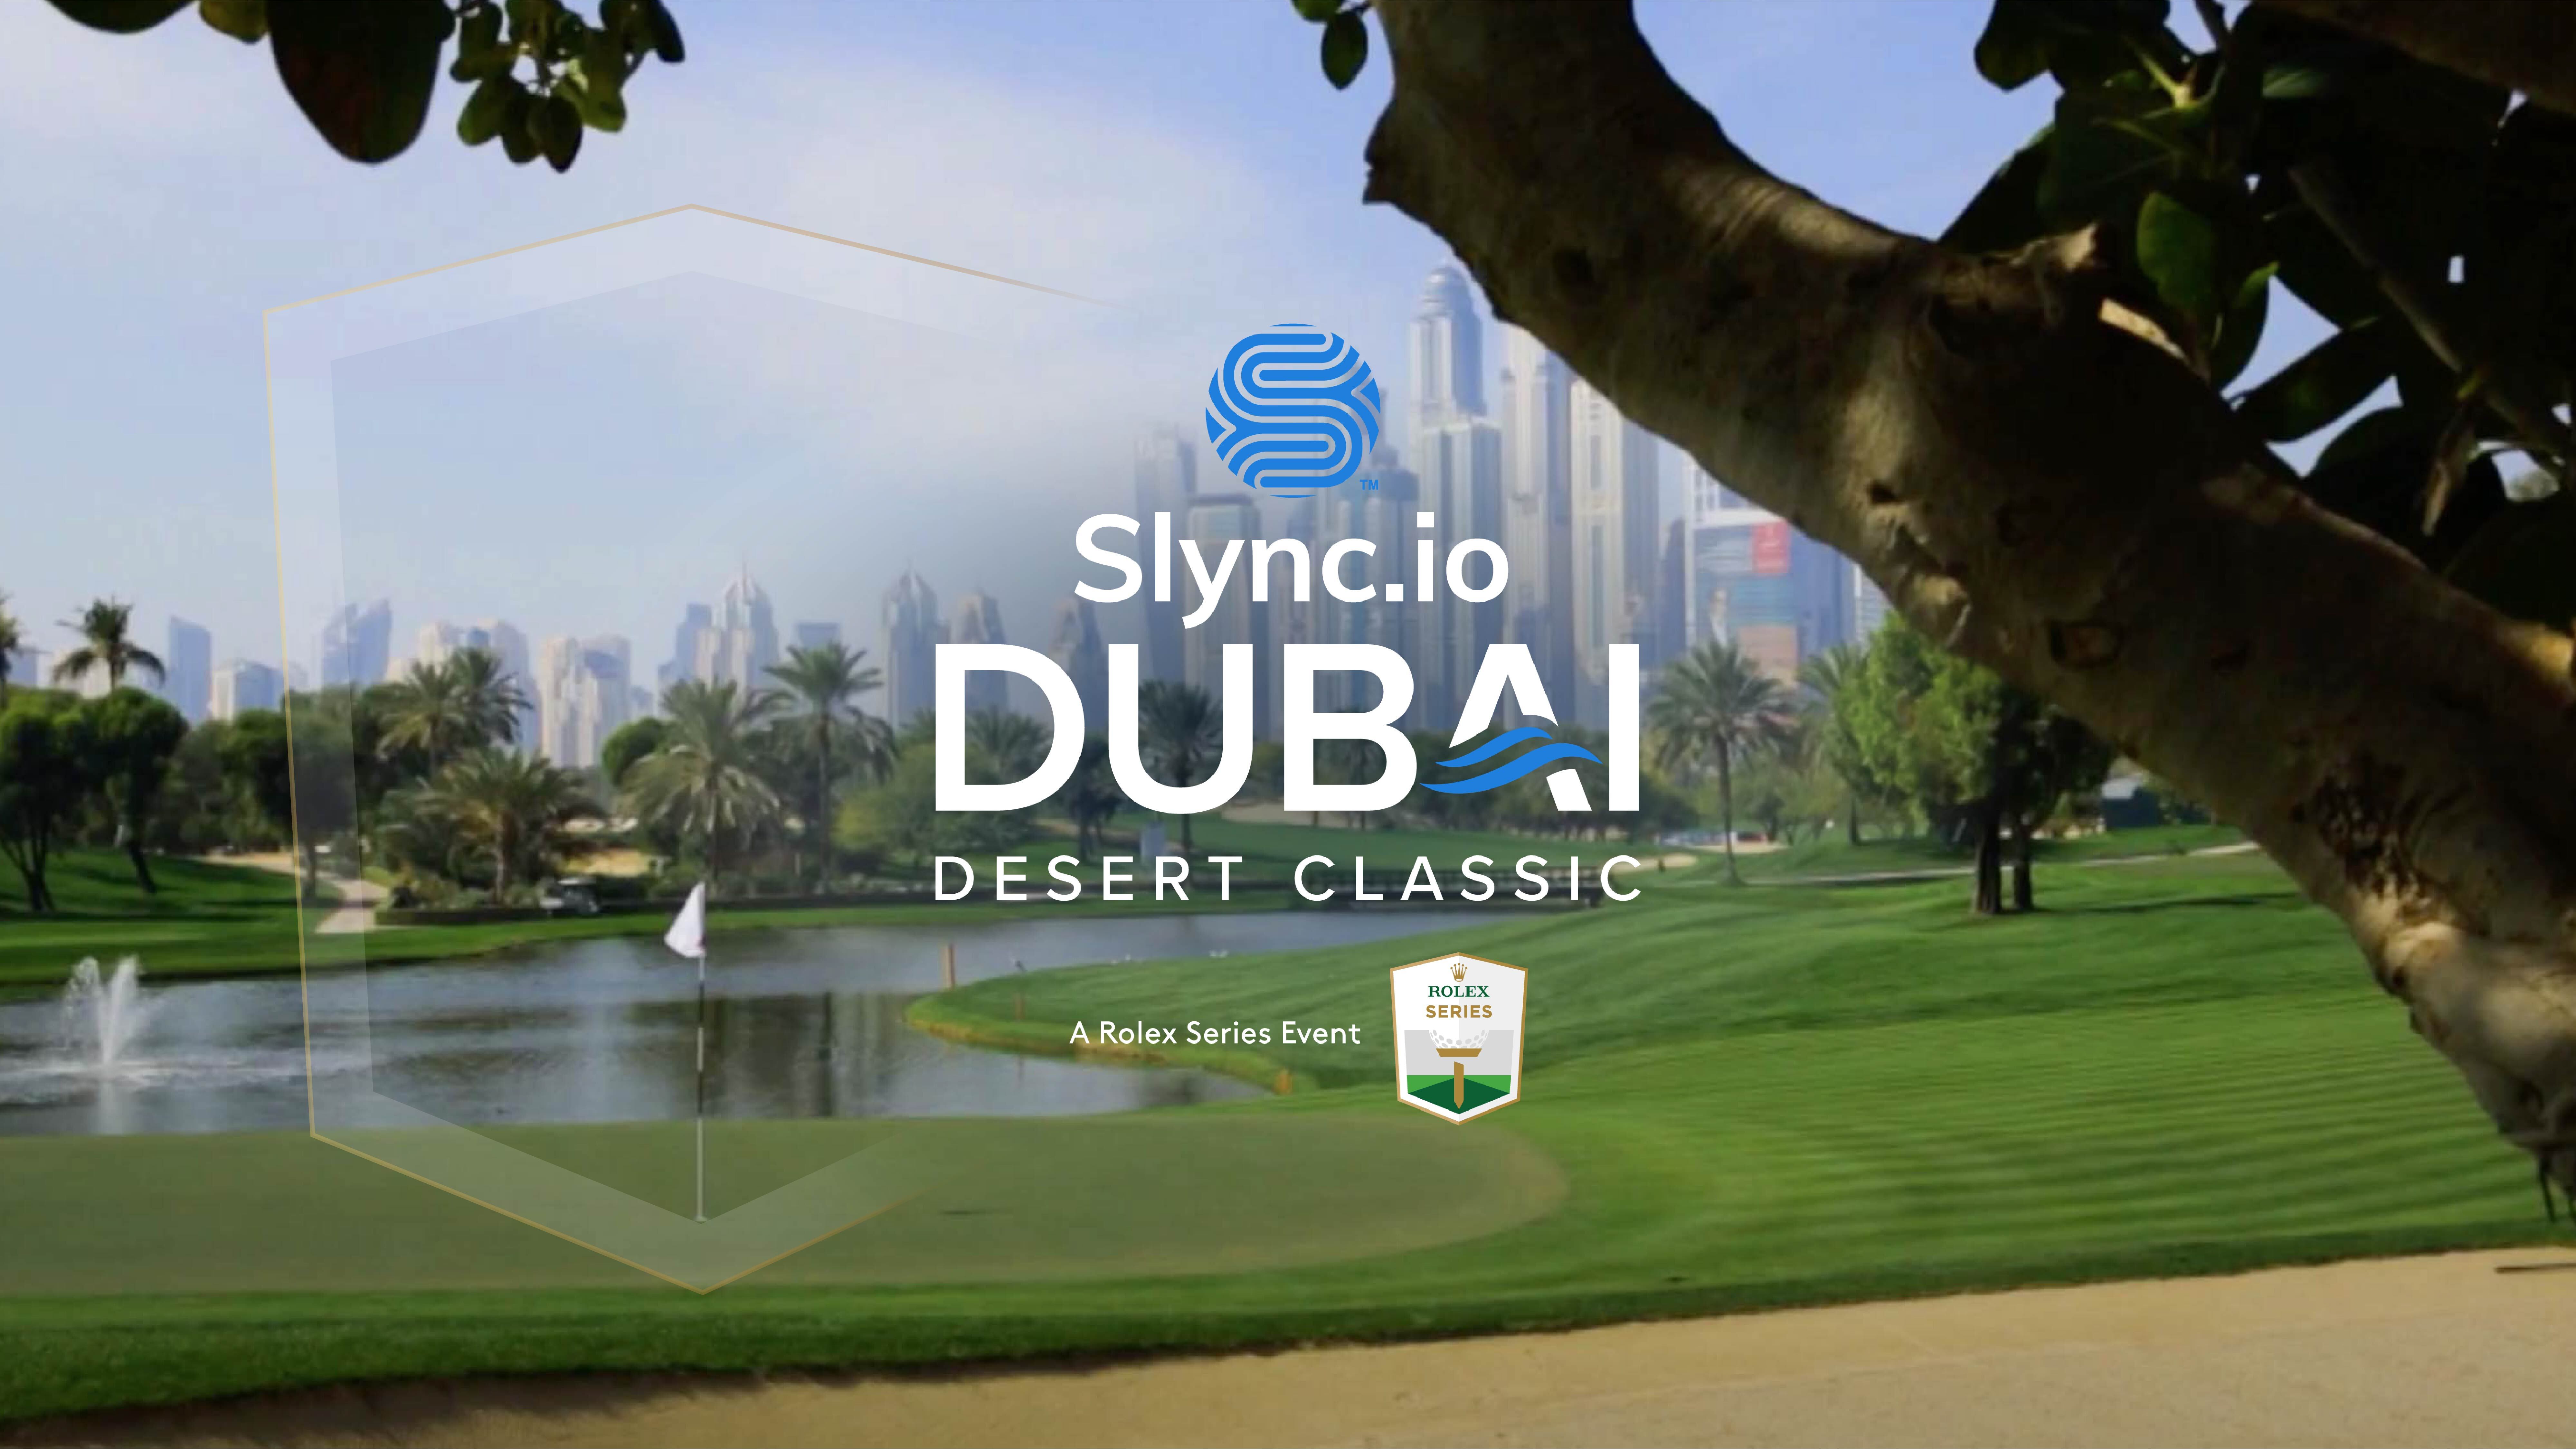 Slync.io becomes new title sponsor of the Dubai Desert Classic